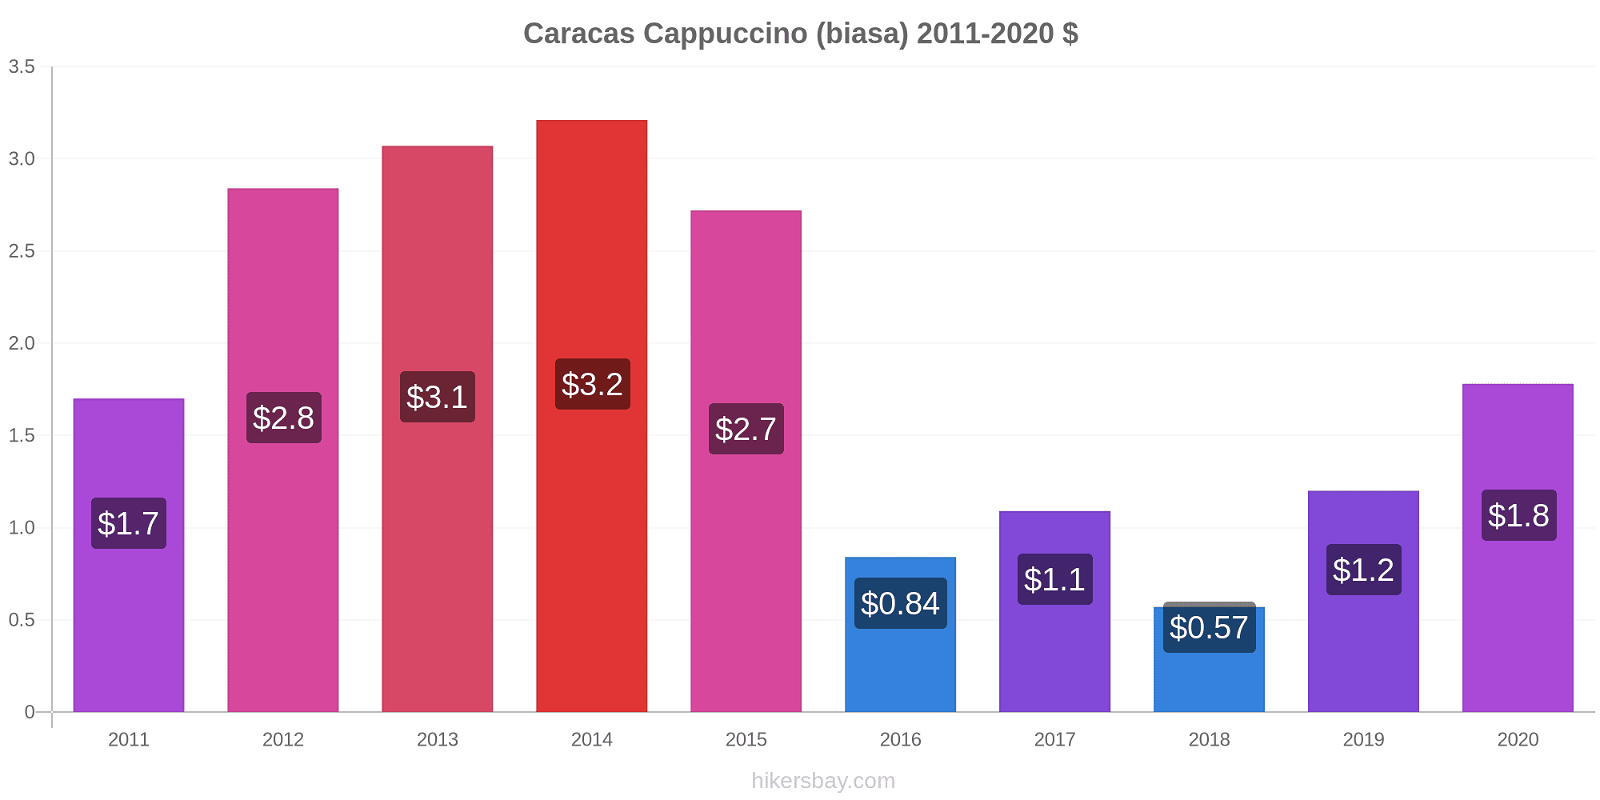 Caracas perubahan harga Cappuccino (biasa) hikersbay.com